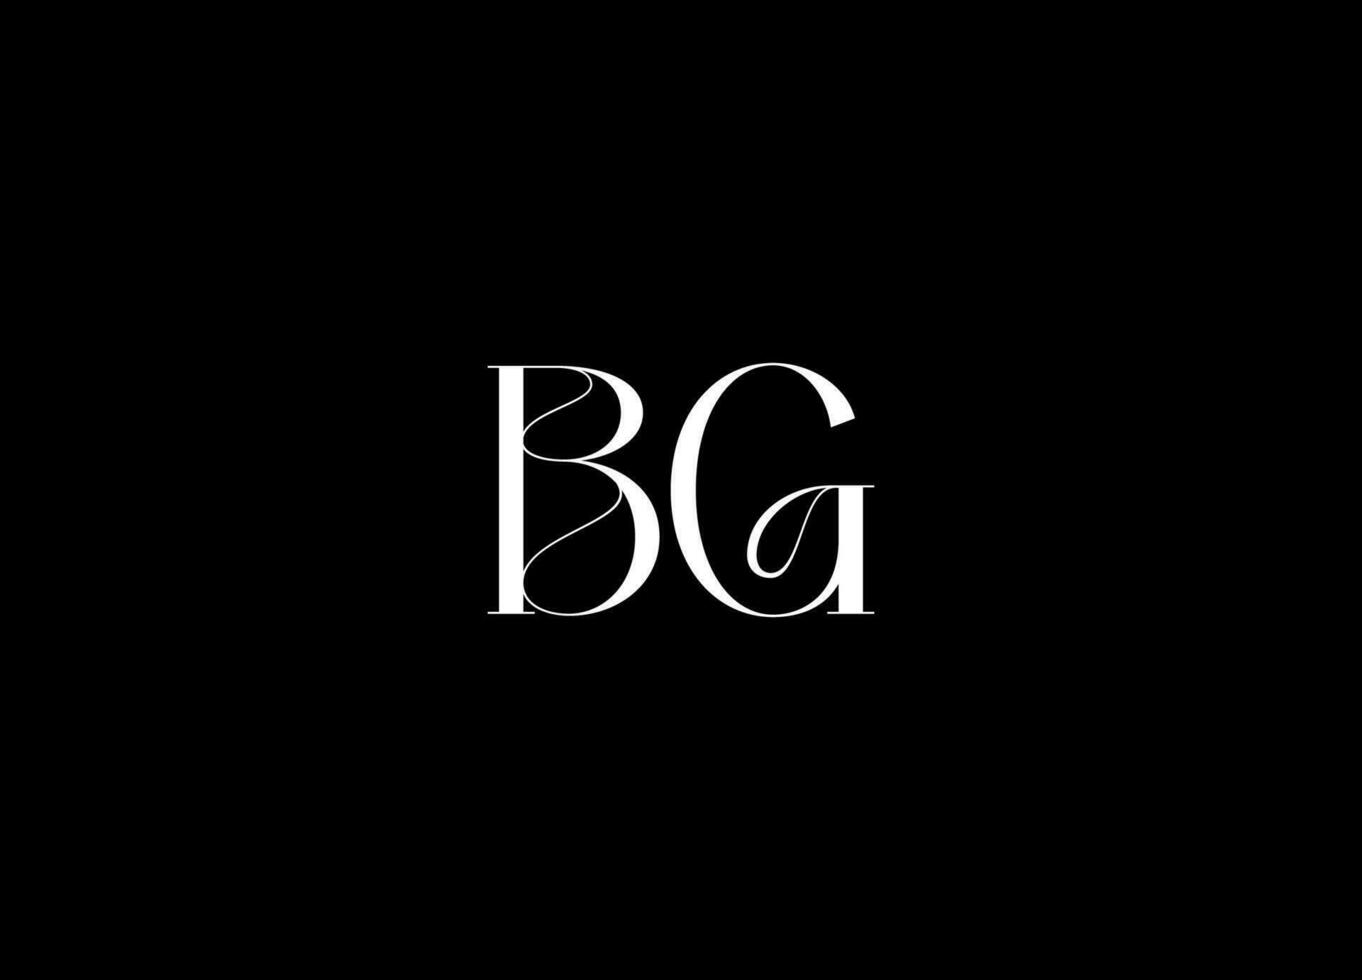 bg brief logo ontwerp en eerste logo vector